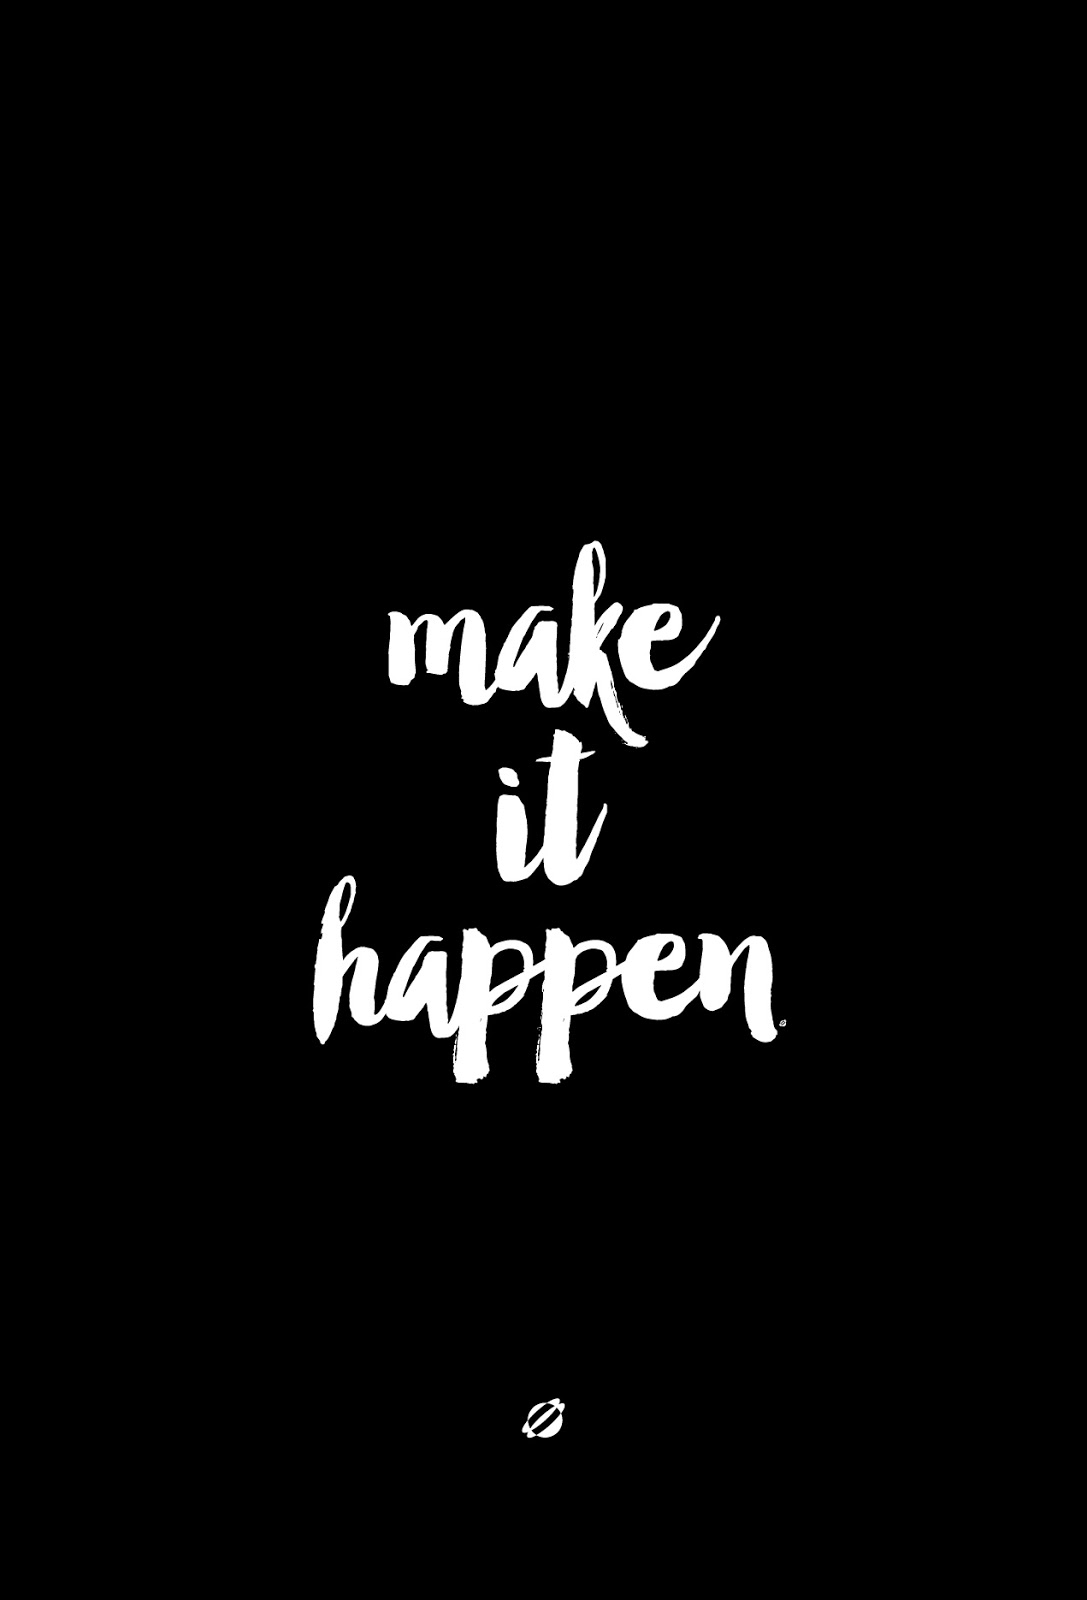 Make your happen. Make it happen. Картинка make it happen. Make it happen персонаж. Джордана Левин make it happen.